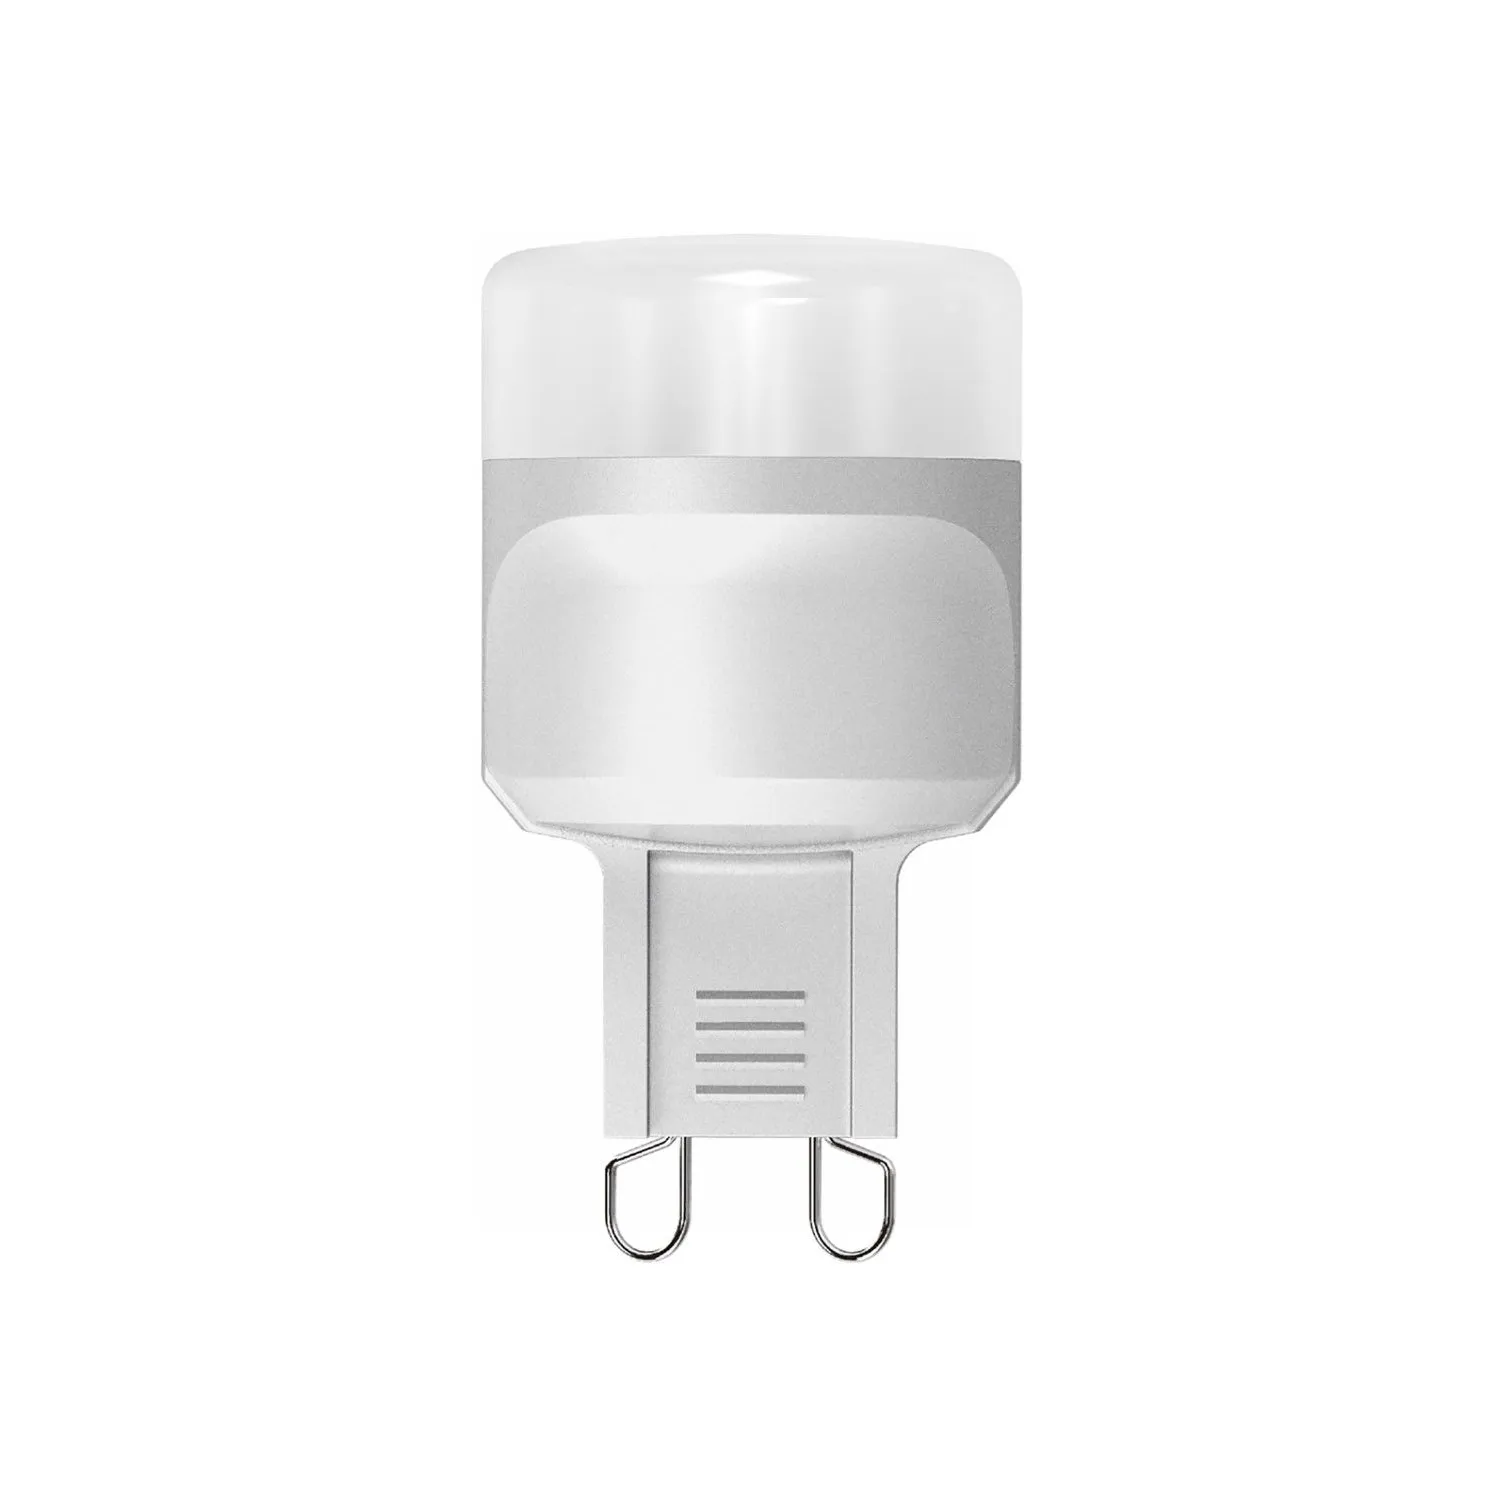 Value LED G9 2W White 6400K 146lm (Metalllic Silver) (1 1)